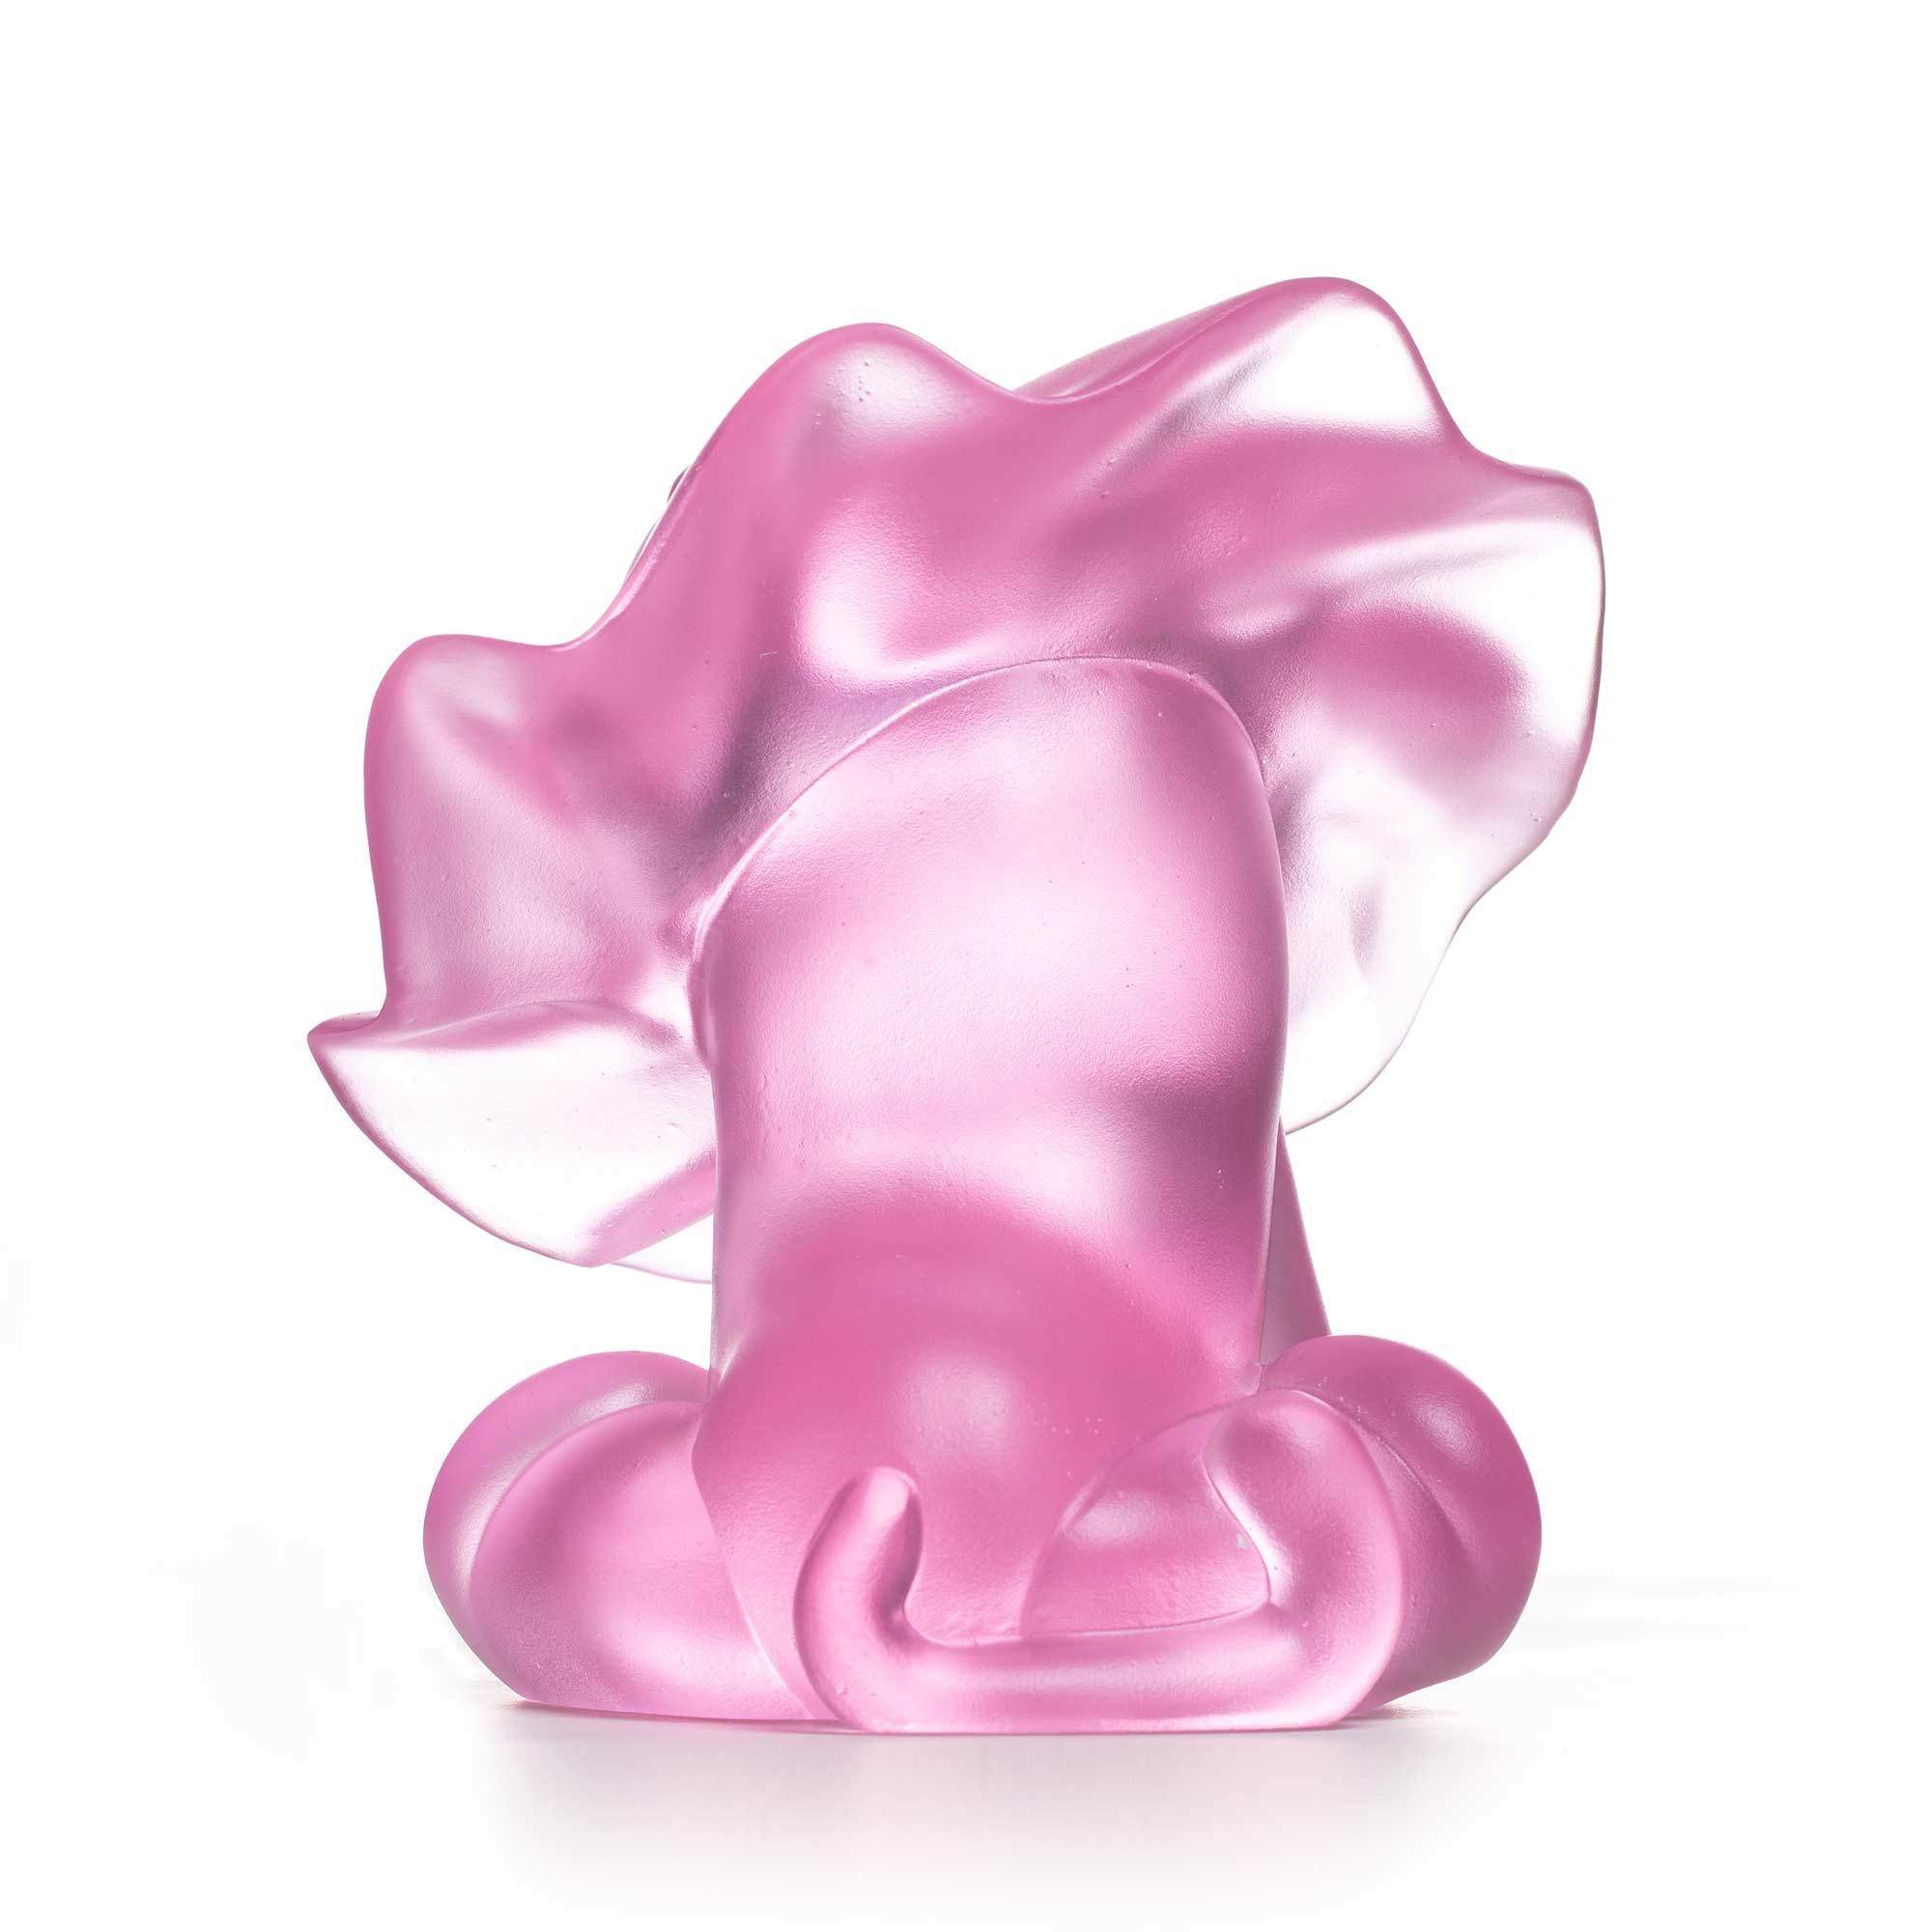 Lion roar, pink crystal sculpture,  15 cm height, by artist Ferdi B Dick, back view